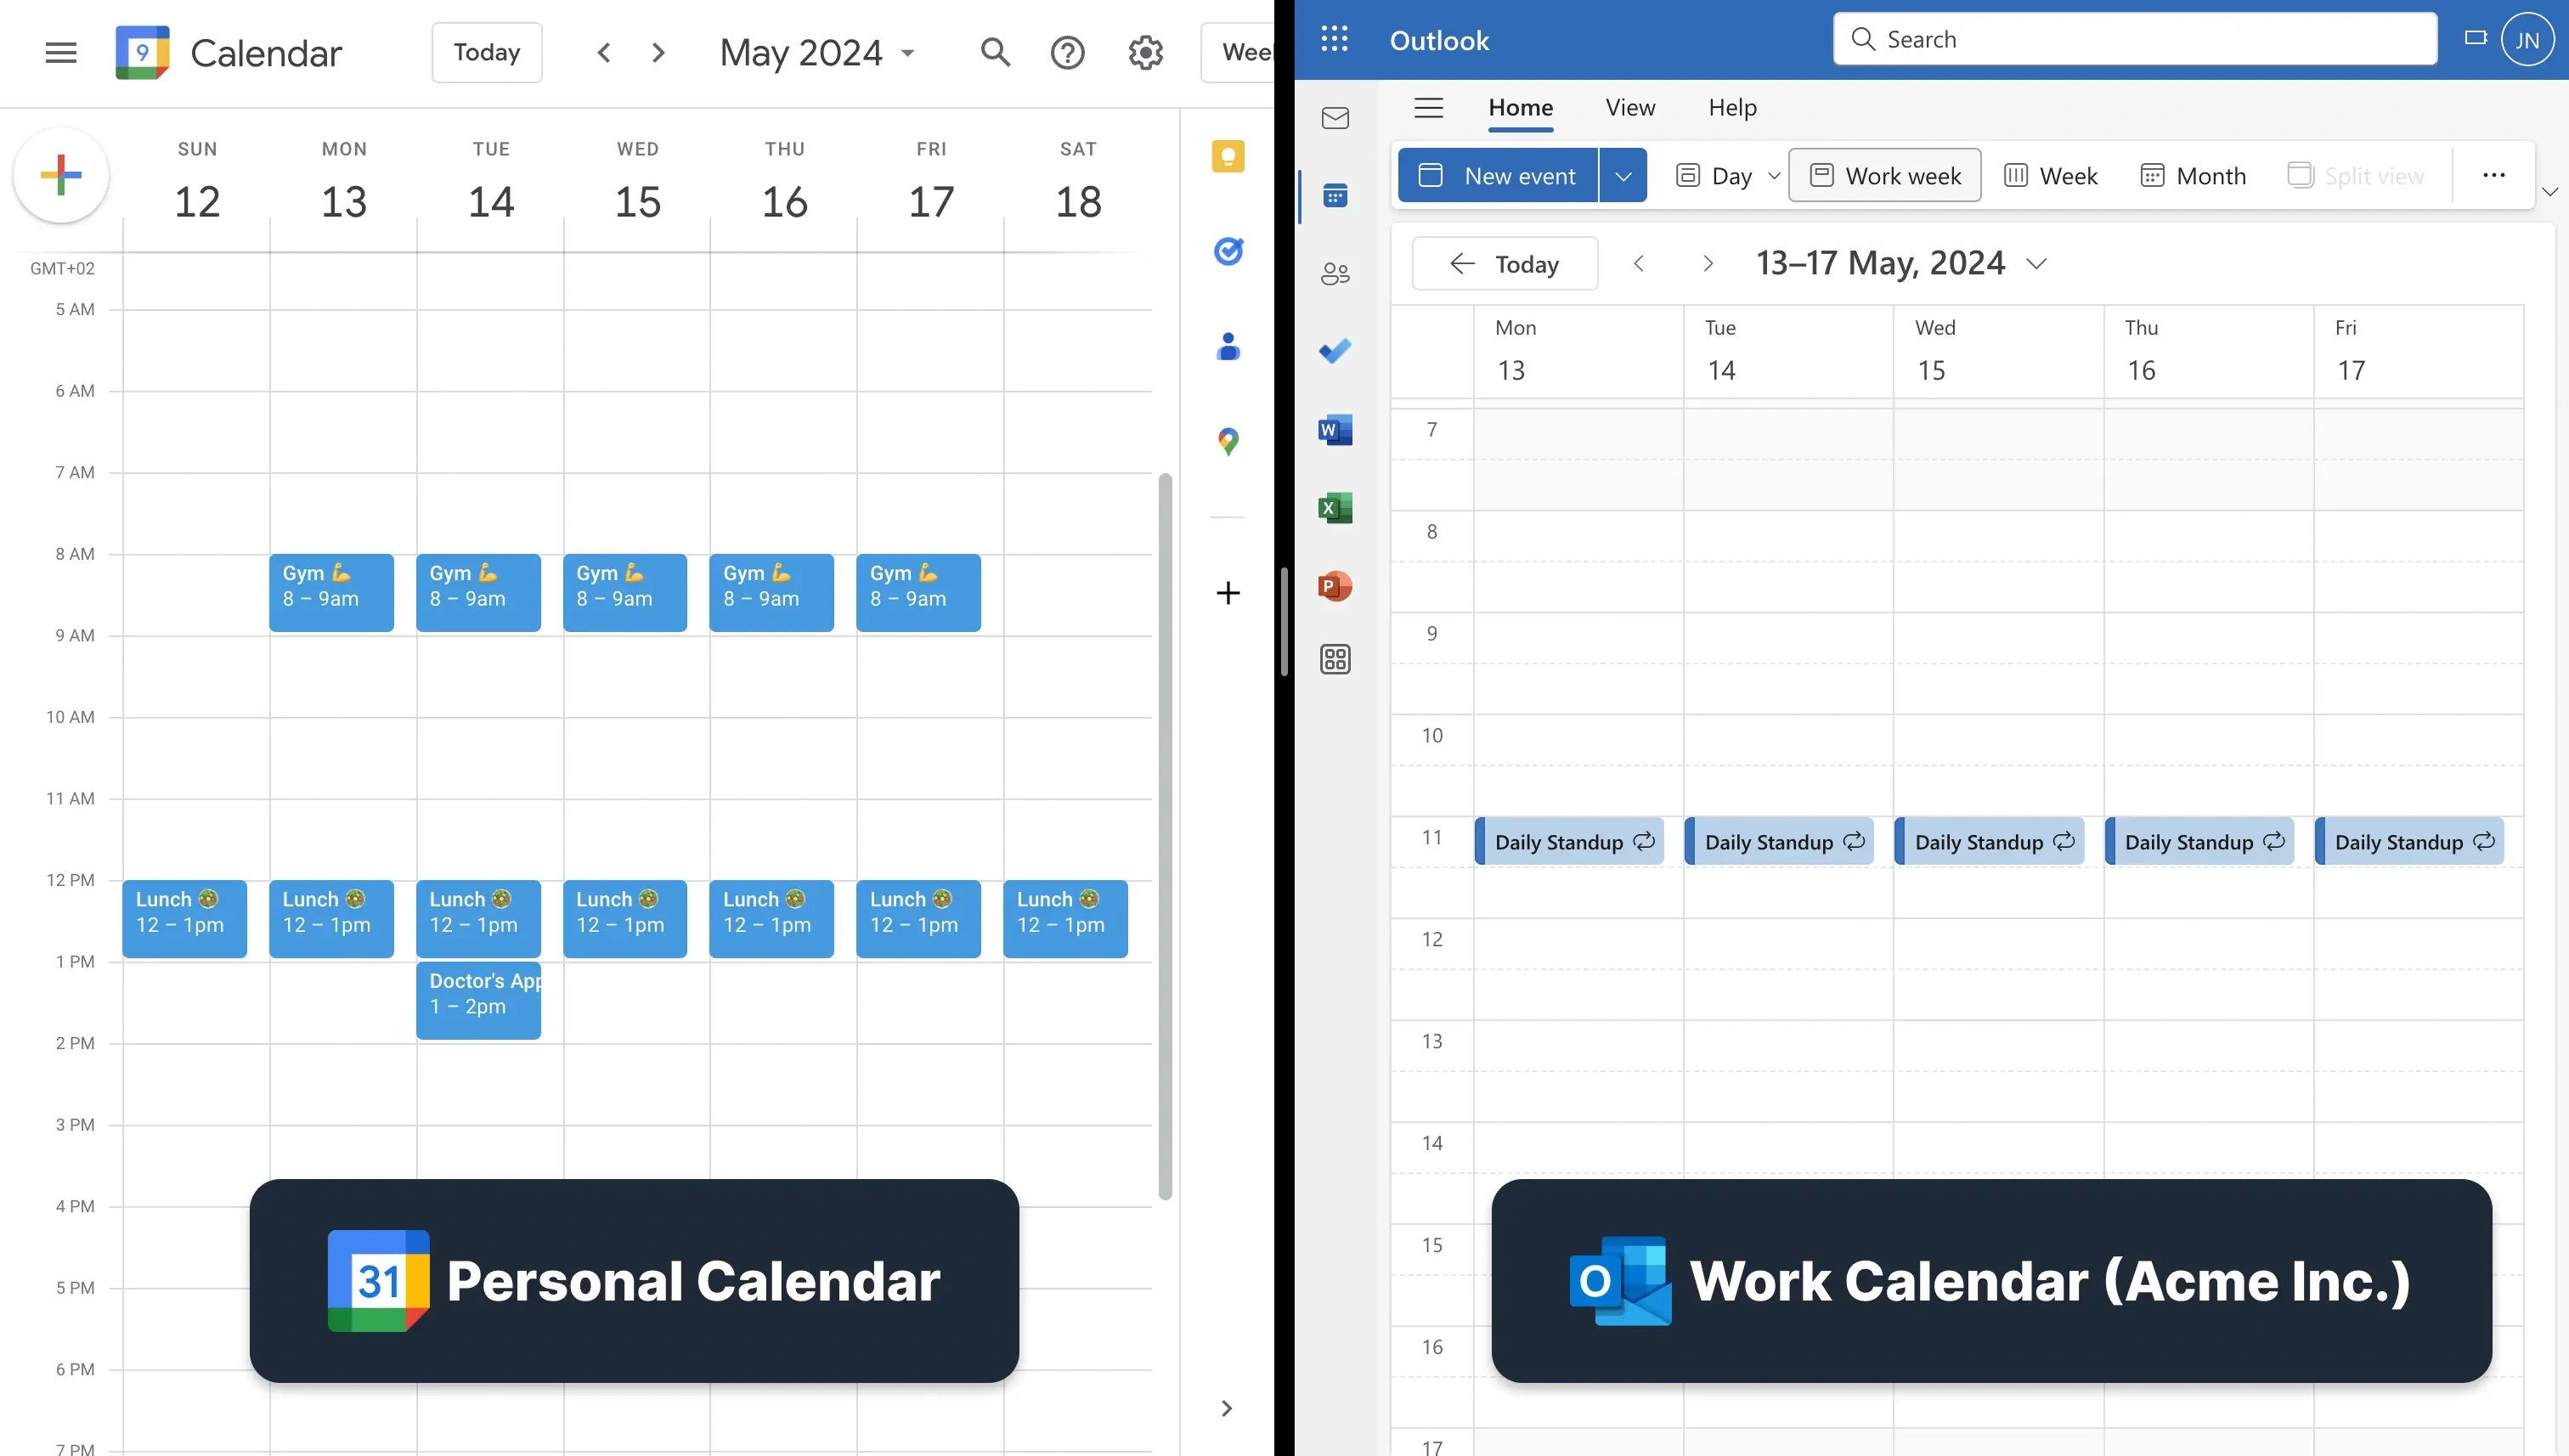 Google Calendar and Outlook Calendar - Side by side